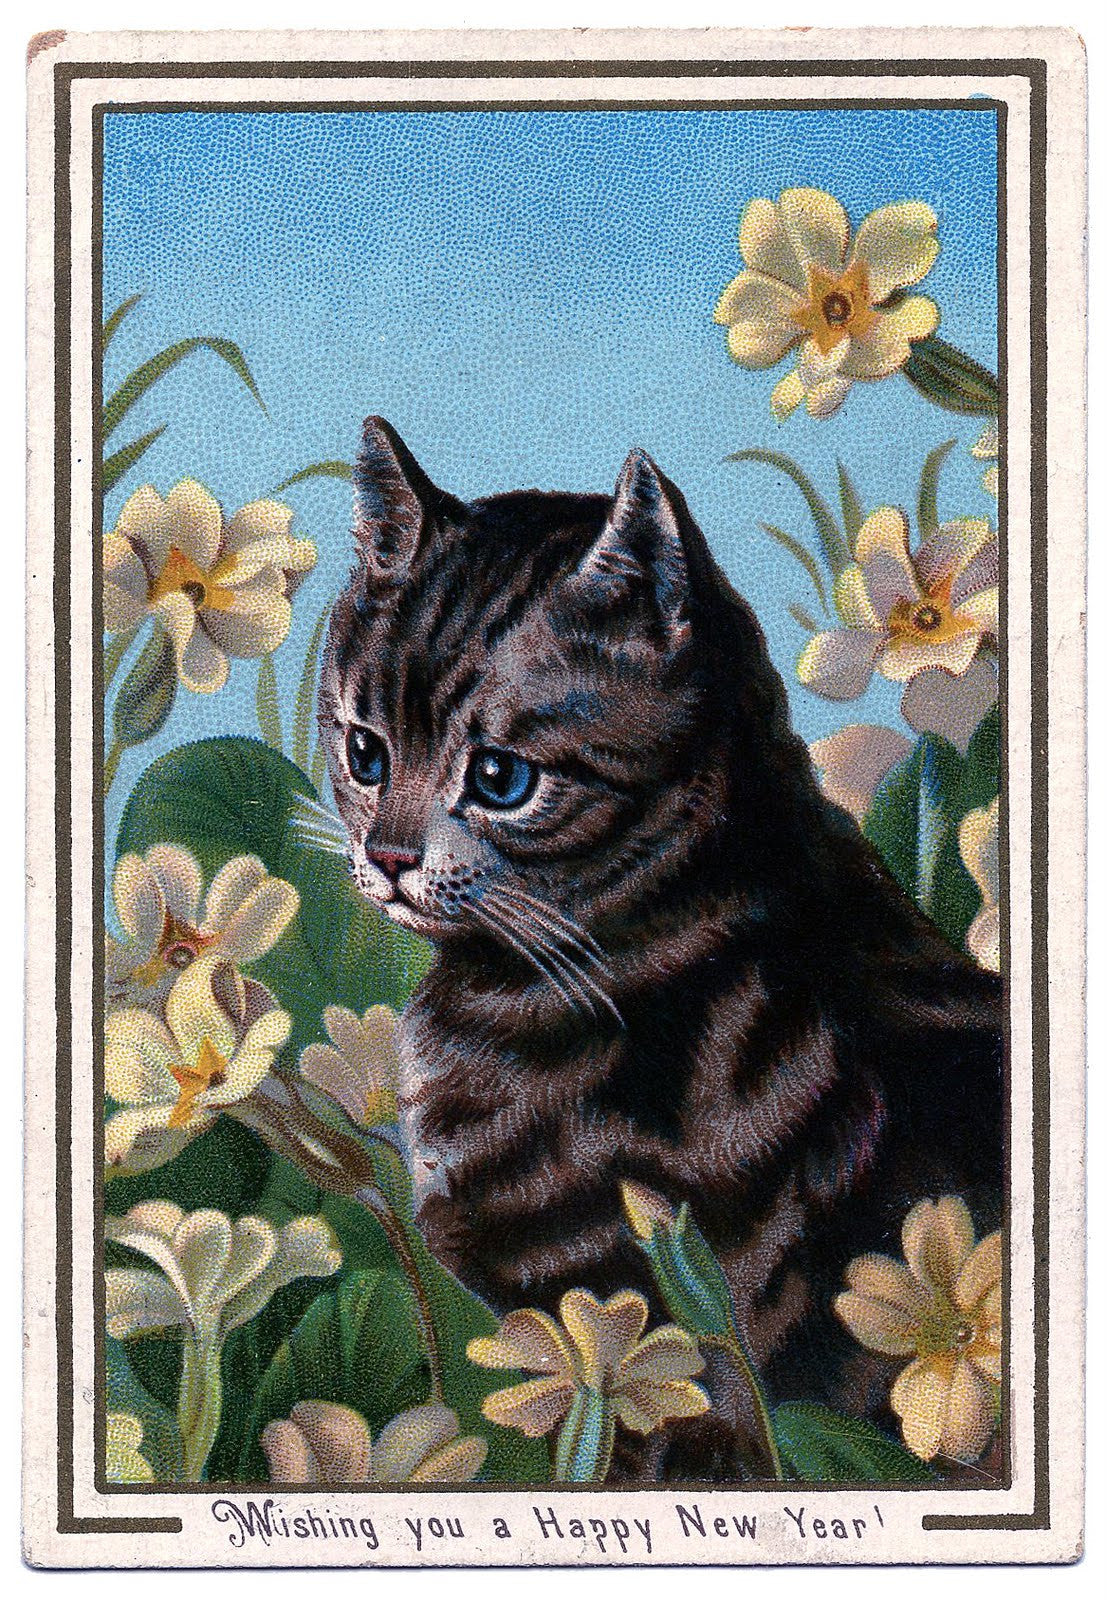 Free Vintage Cat Image To Download